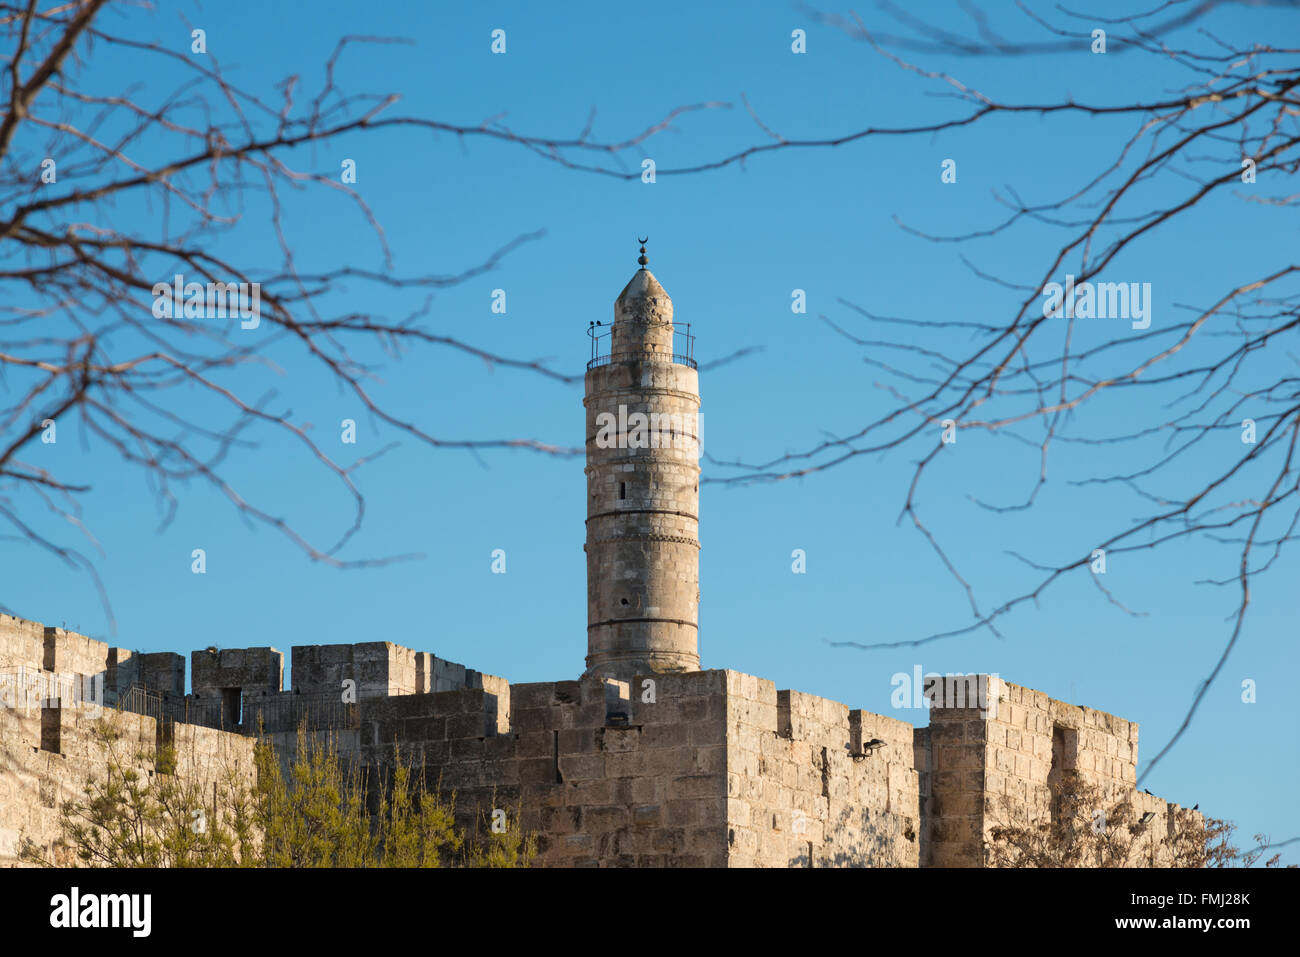 Das Minarett in der Turm Davids. Altstadt von Jerusalem. Israel. Stockfoto